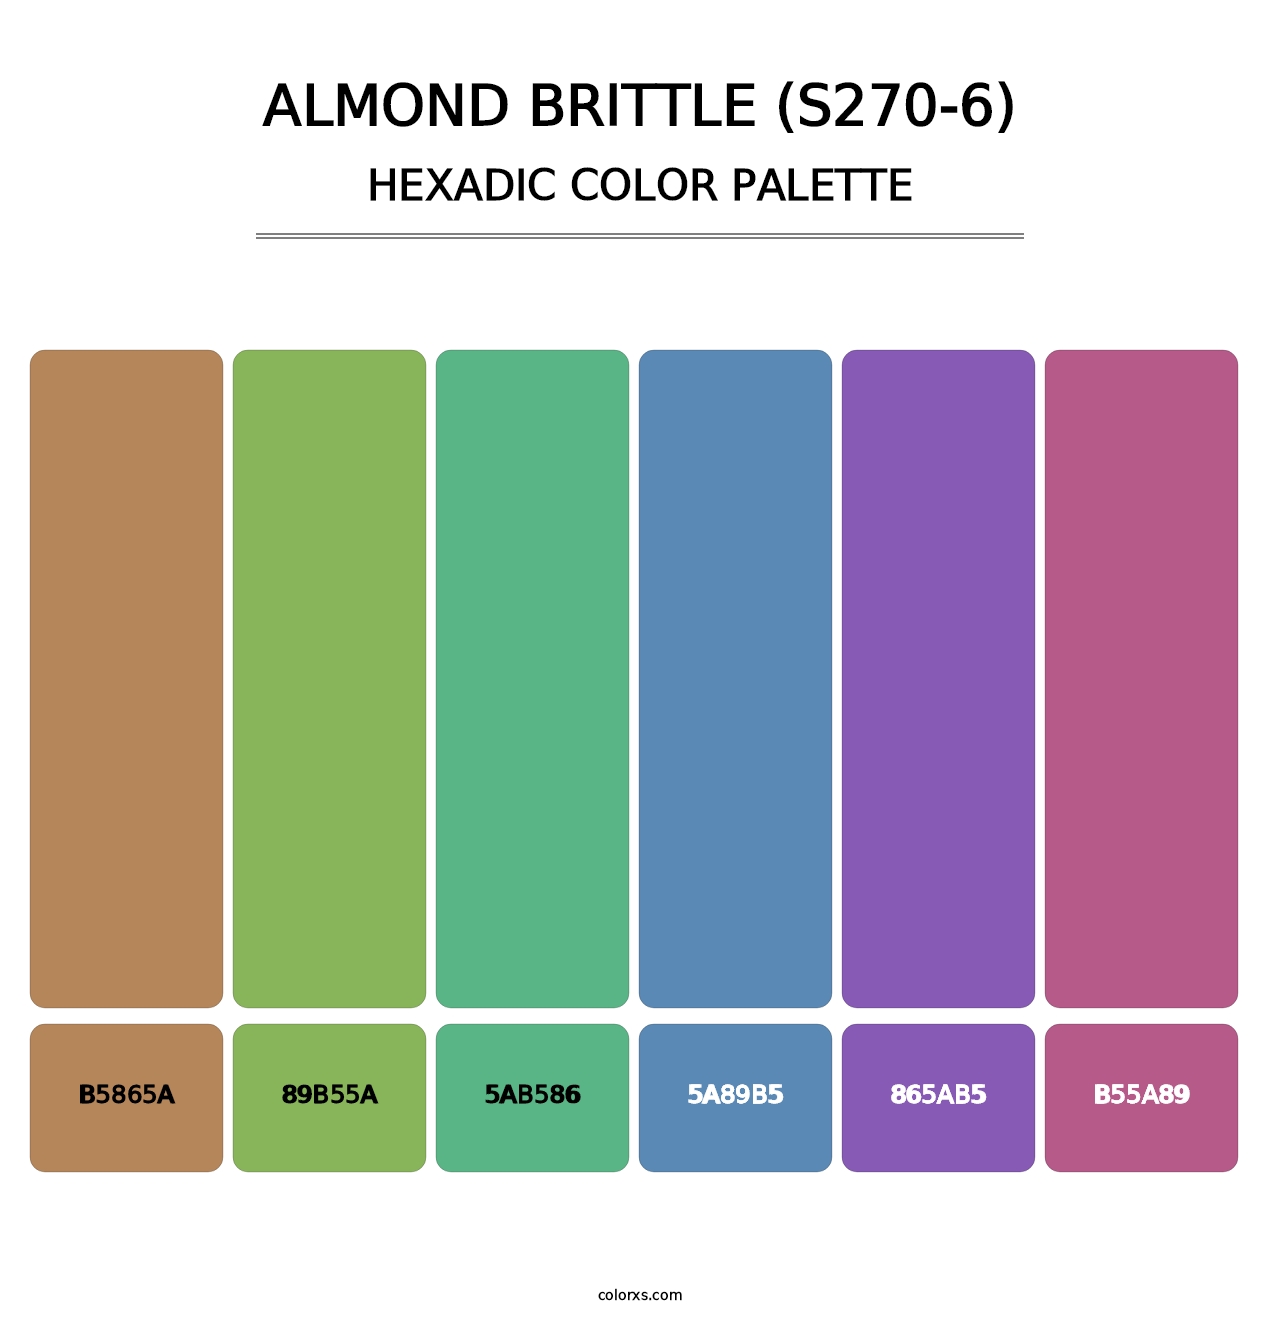 Almond Brittle (S270-6) - Hexadic Color Palette